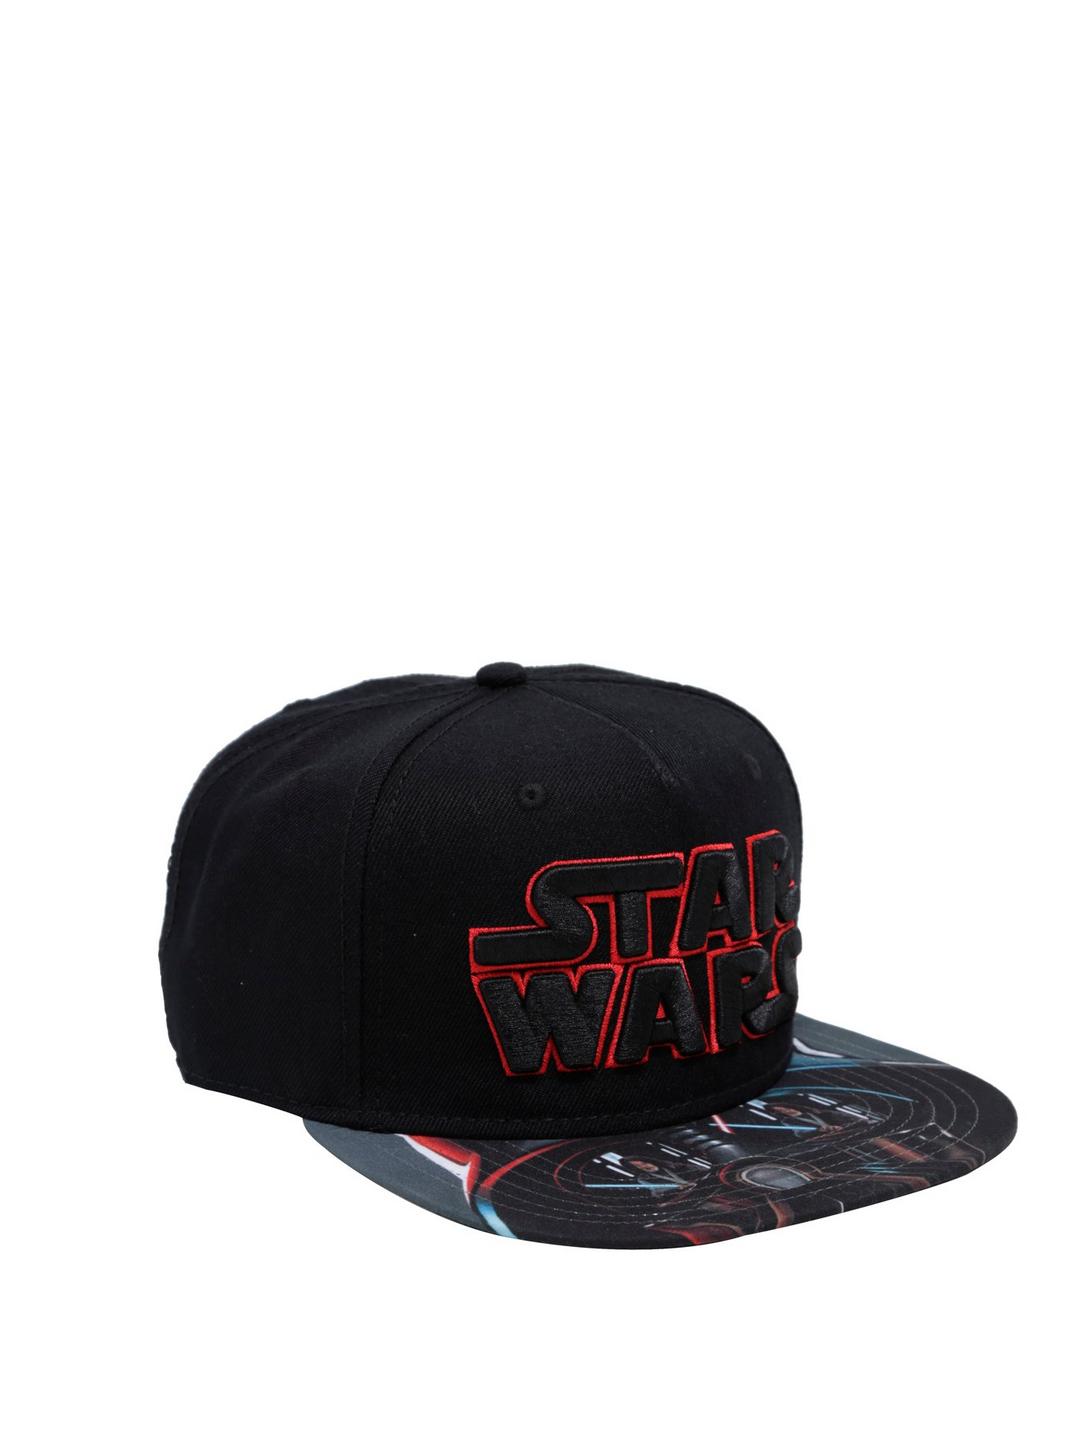 Star Wars Darth Vader Obi Wan Kenobi Sublimated Snapback Hat, , hi-res